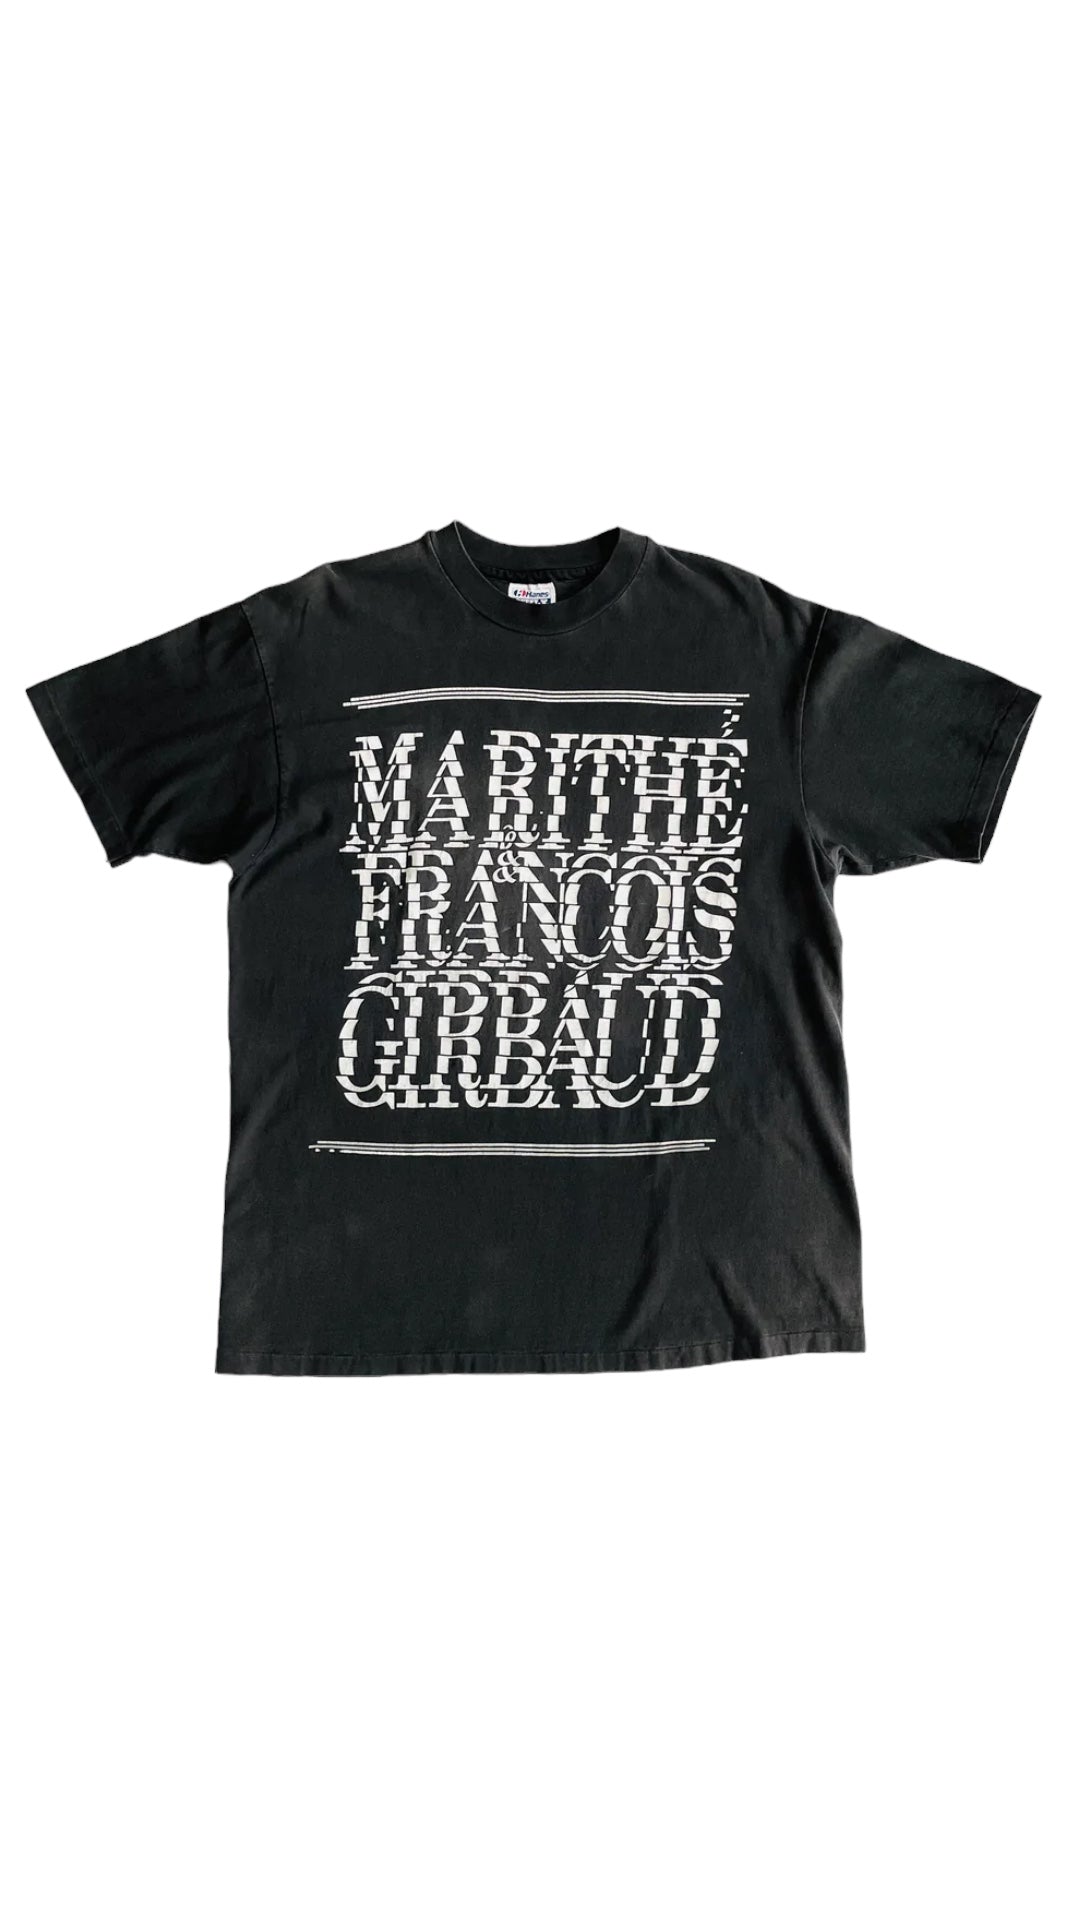 Vintage 90s Black MARITHE & FRANCIOS GIRBAUD logo t-shirt  - Size L